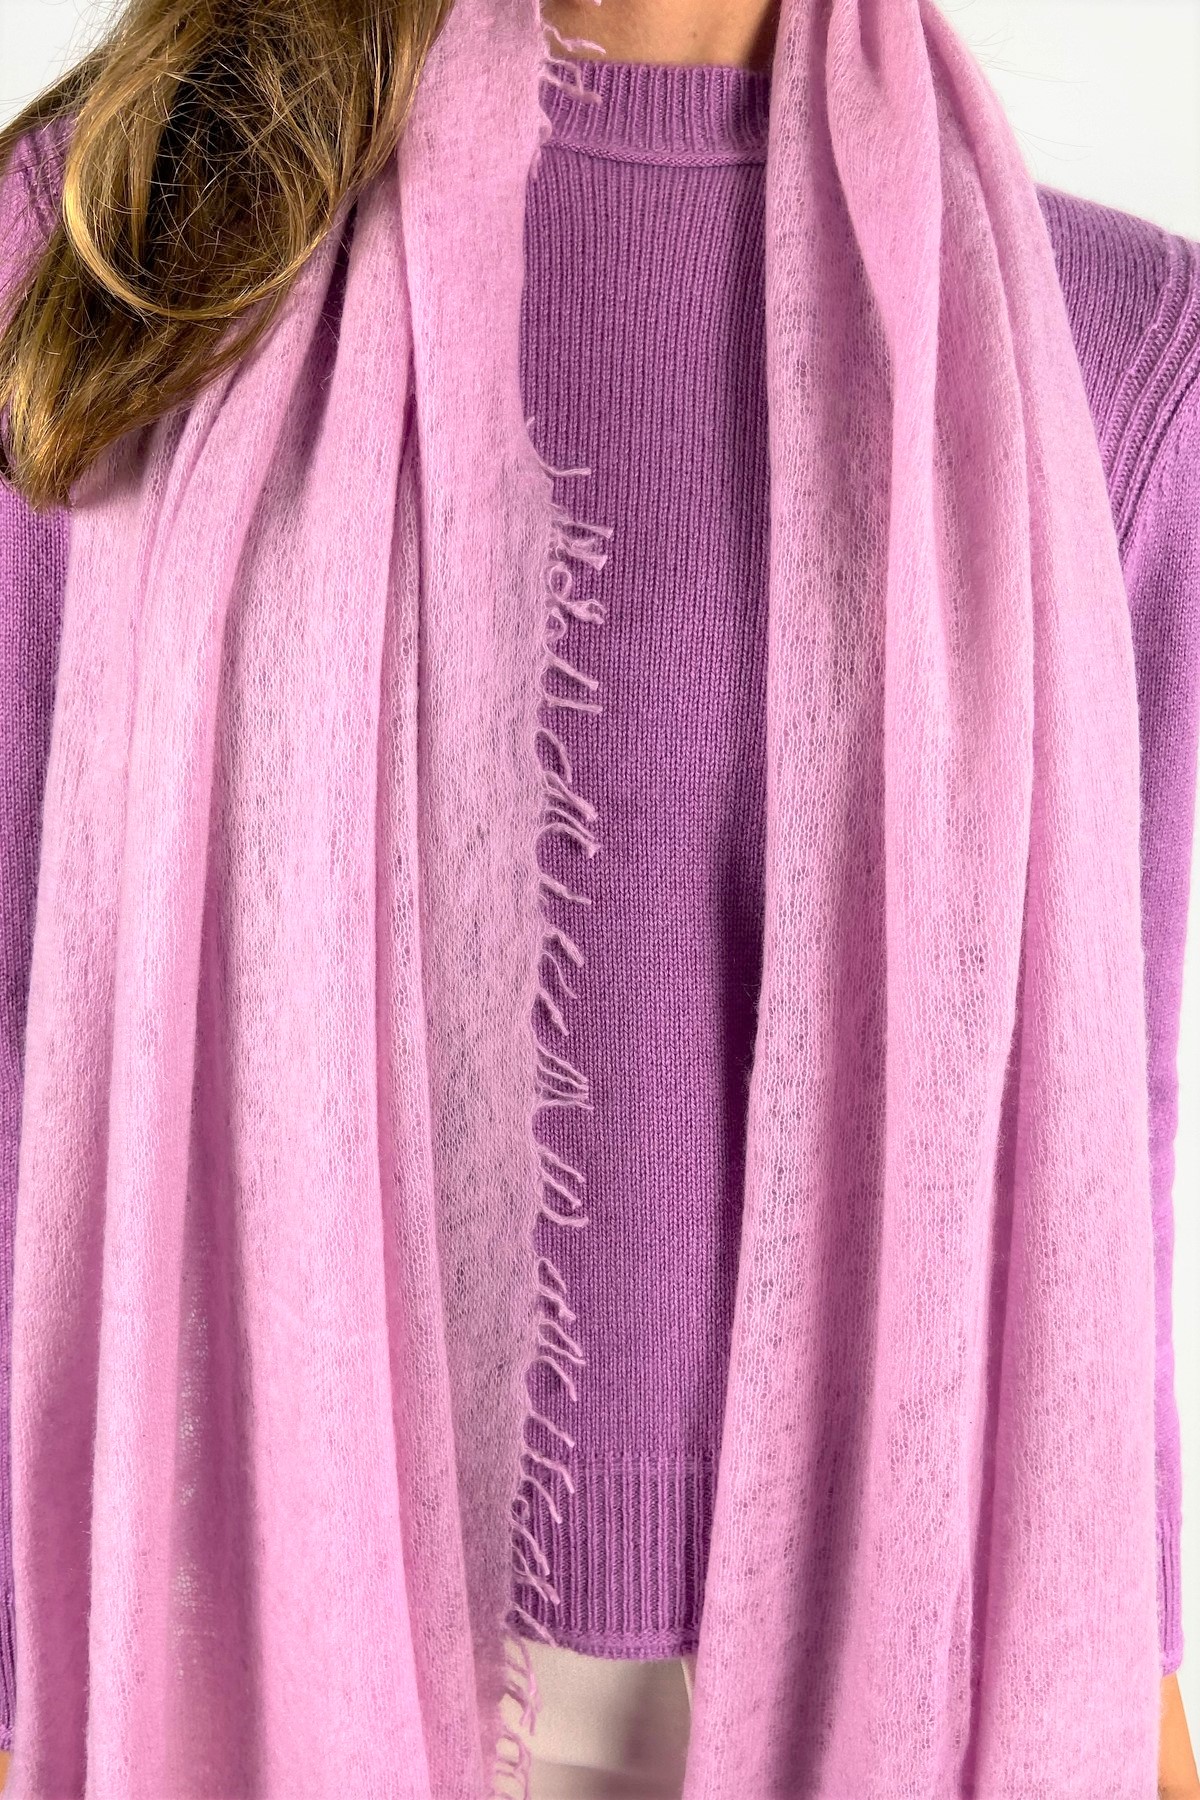 Hemisphere - Tomi CL - 232F - Sjaal 100% cashmere franjes roze - uitverkocht